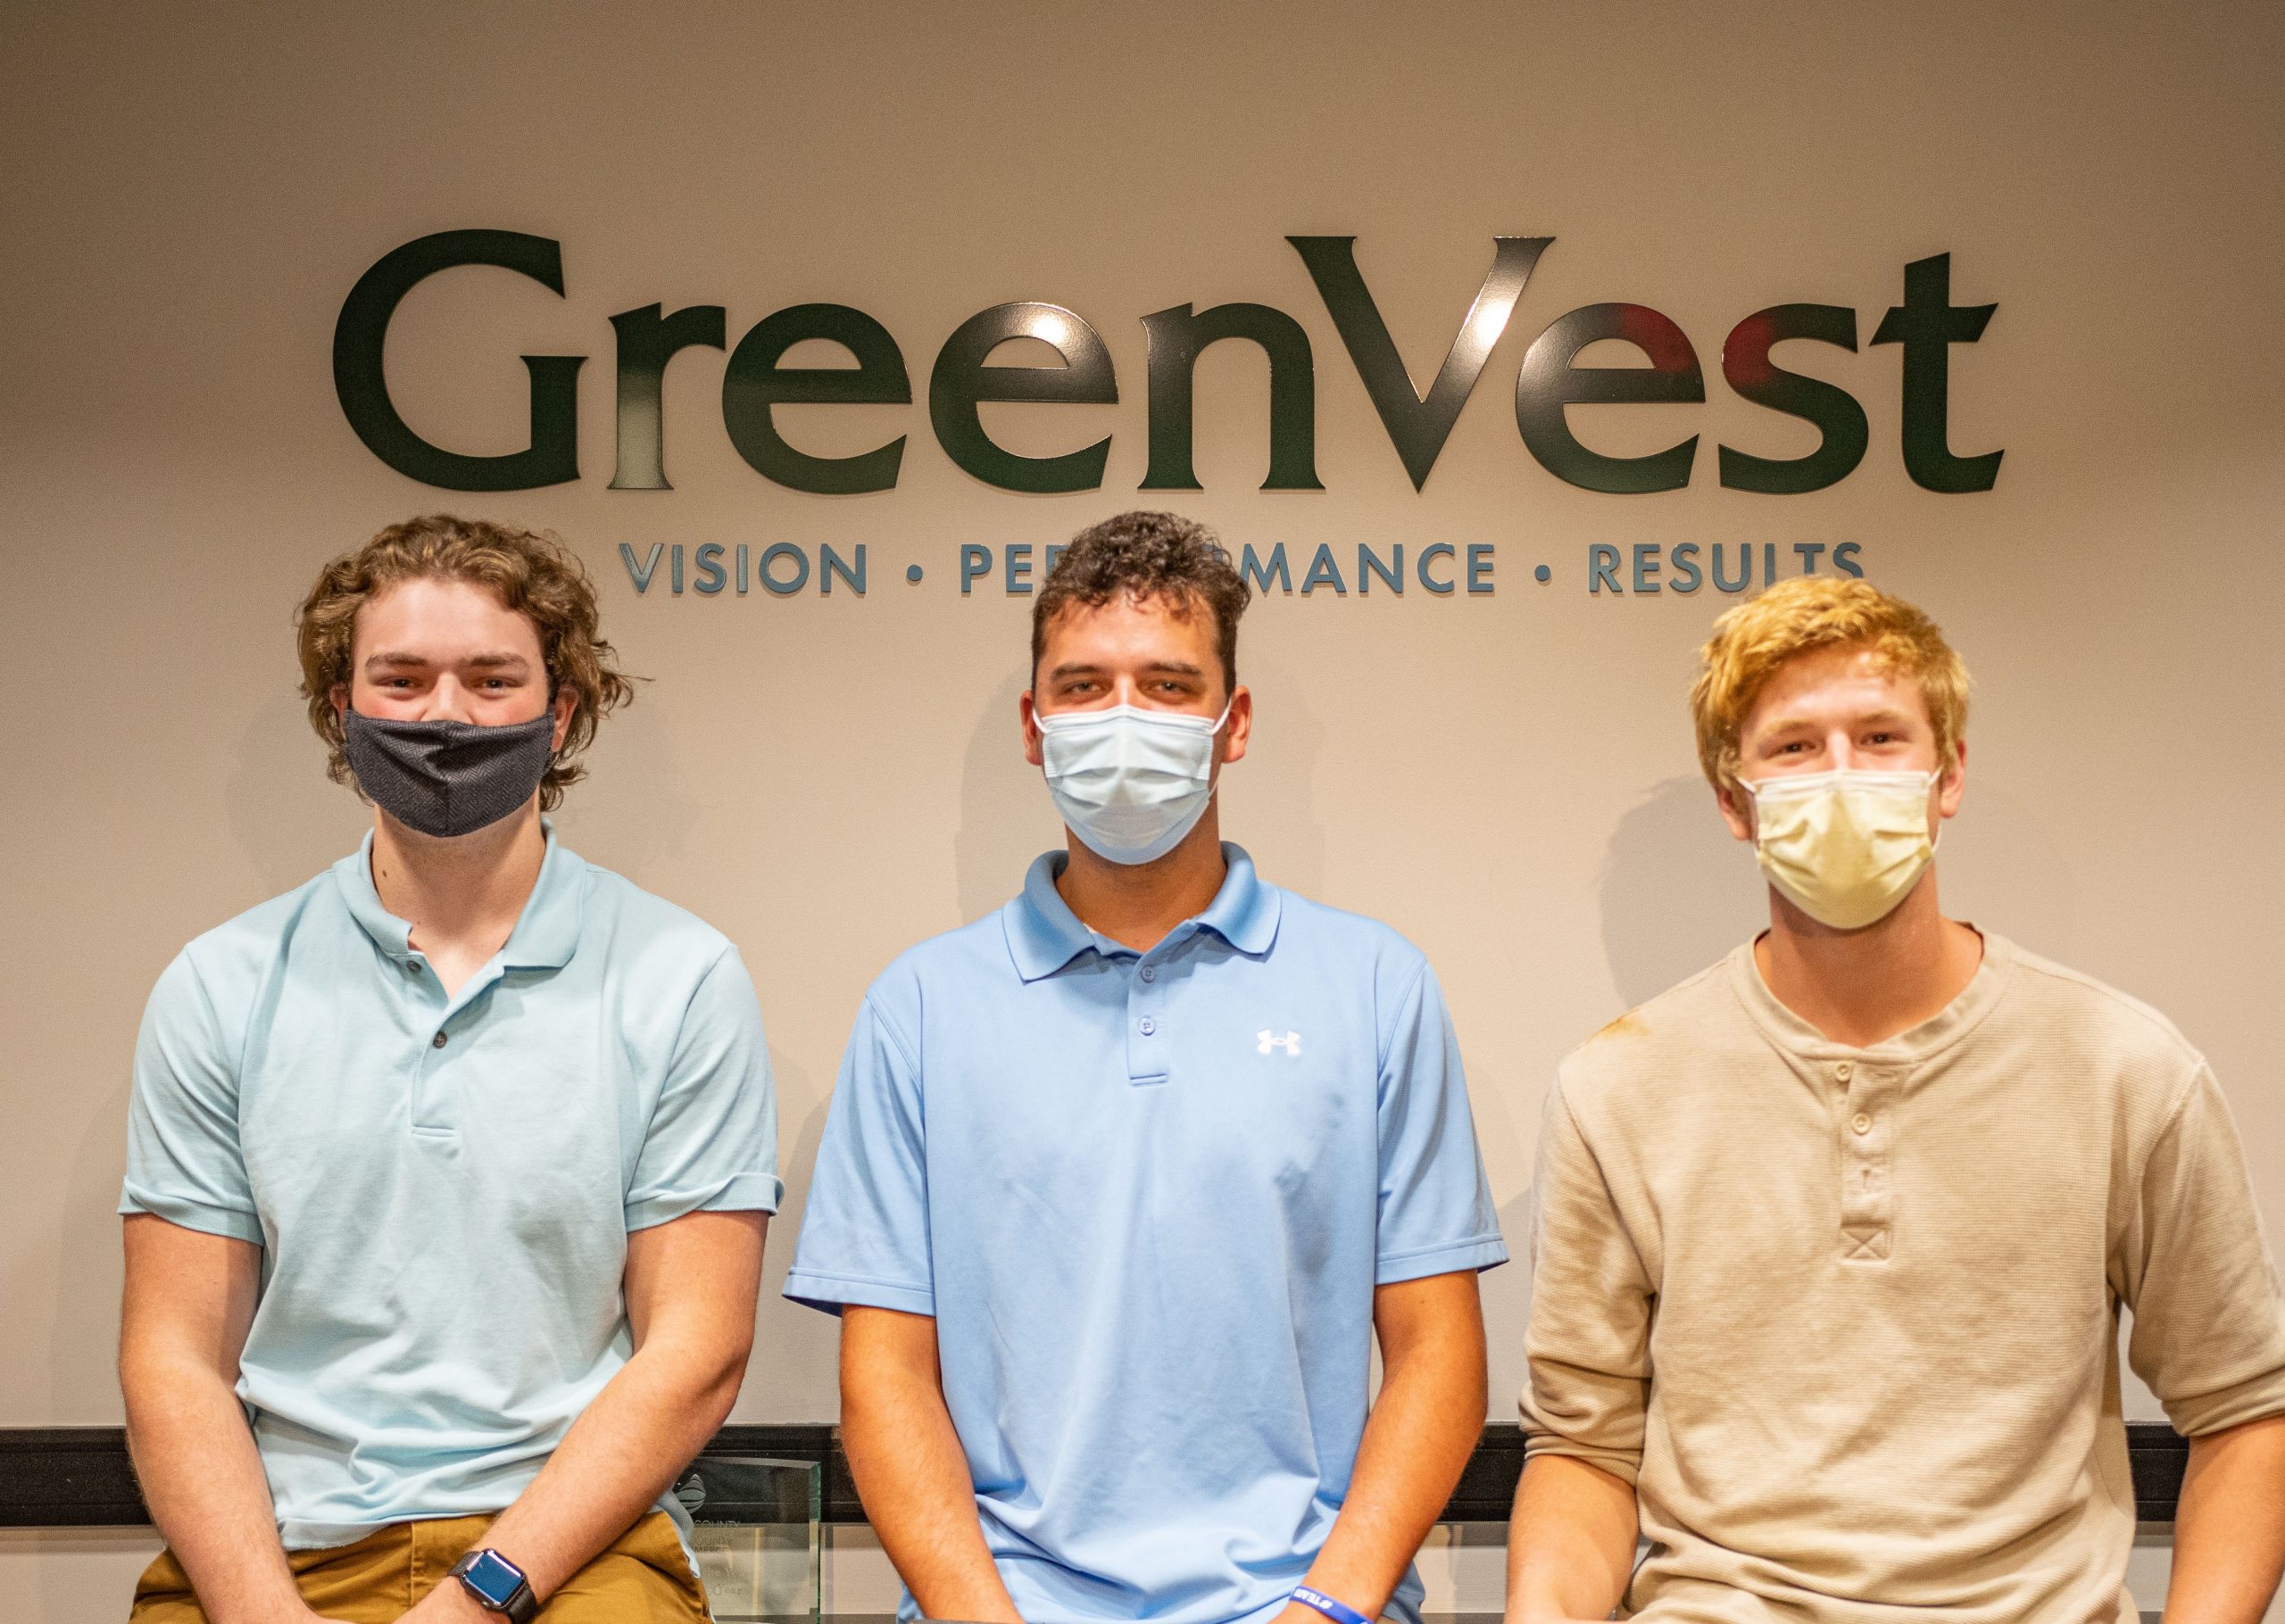 GreenVest's Interns: Nate, Christian, and Matt